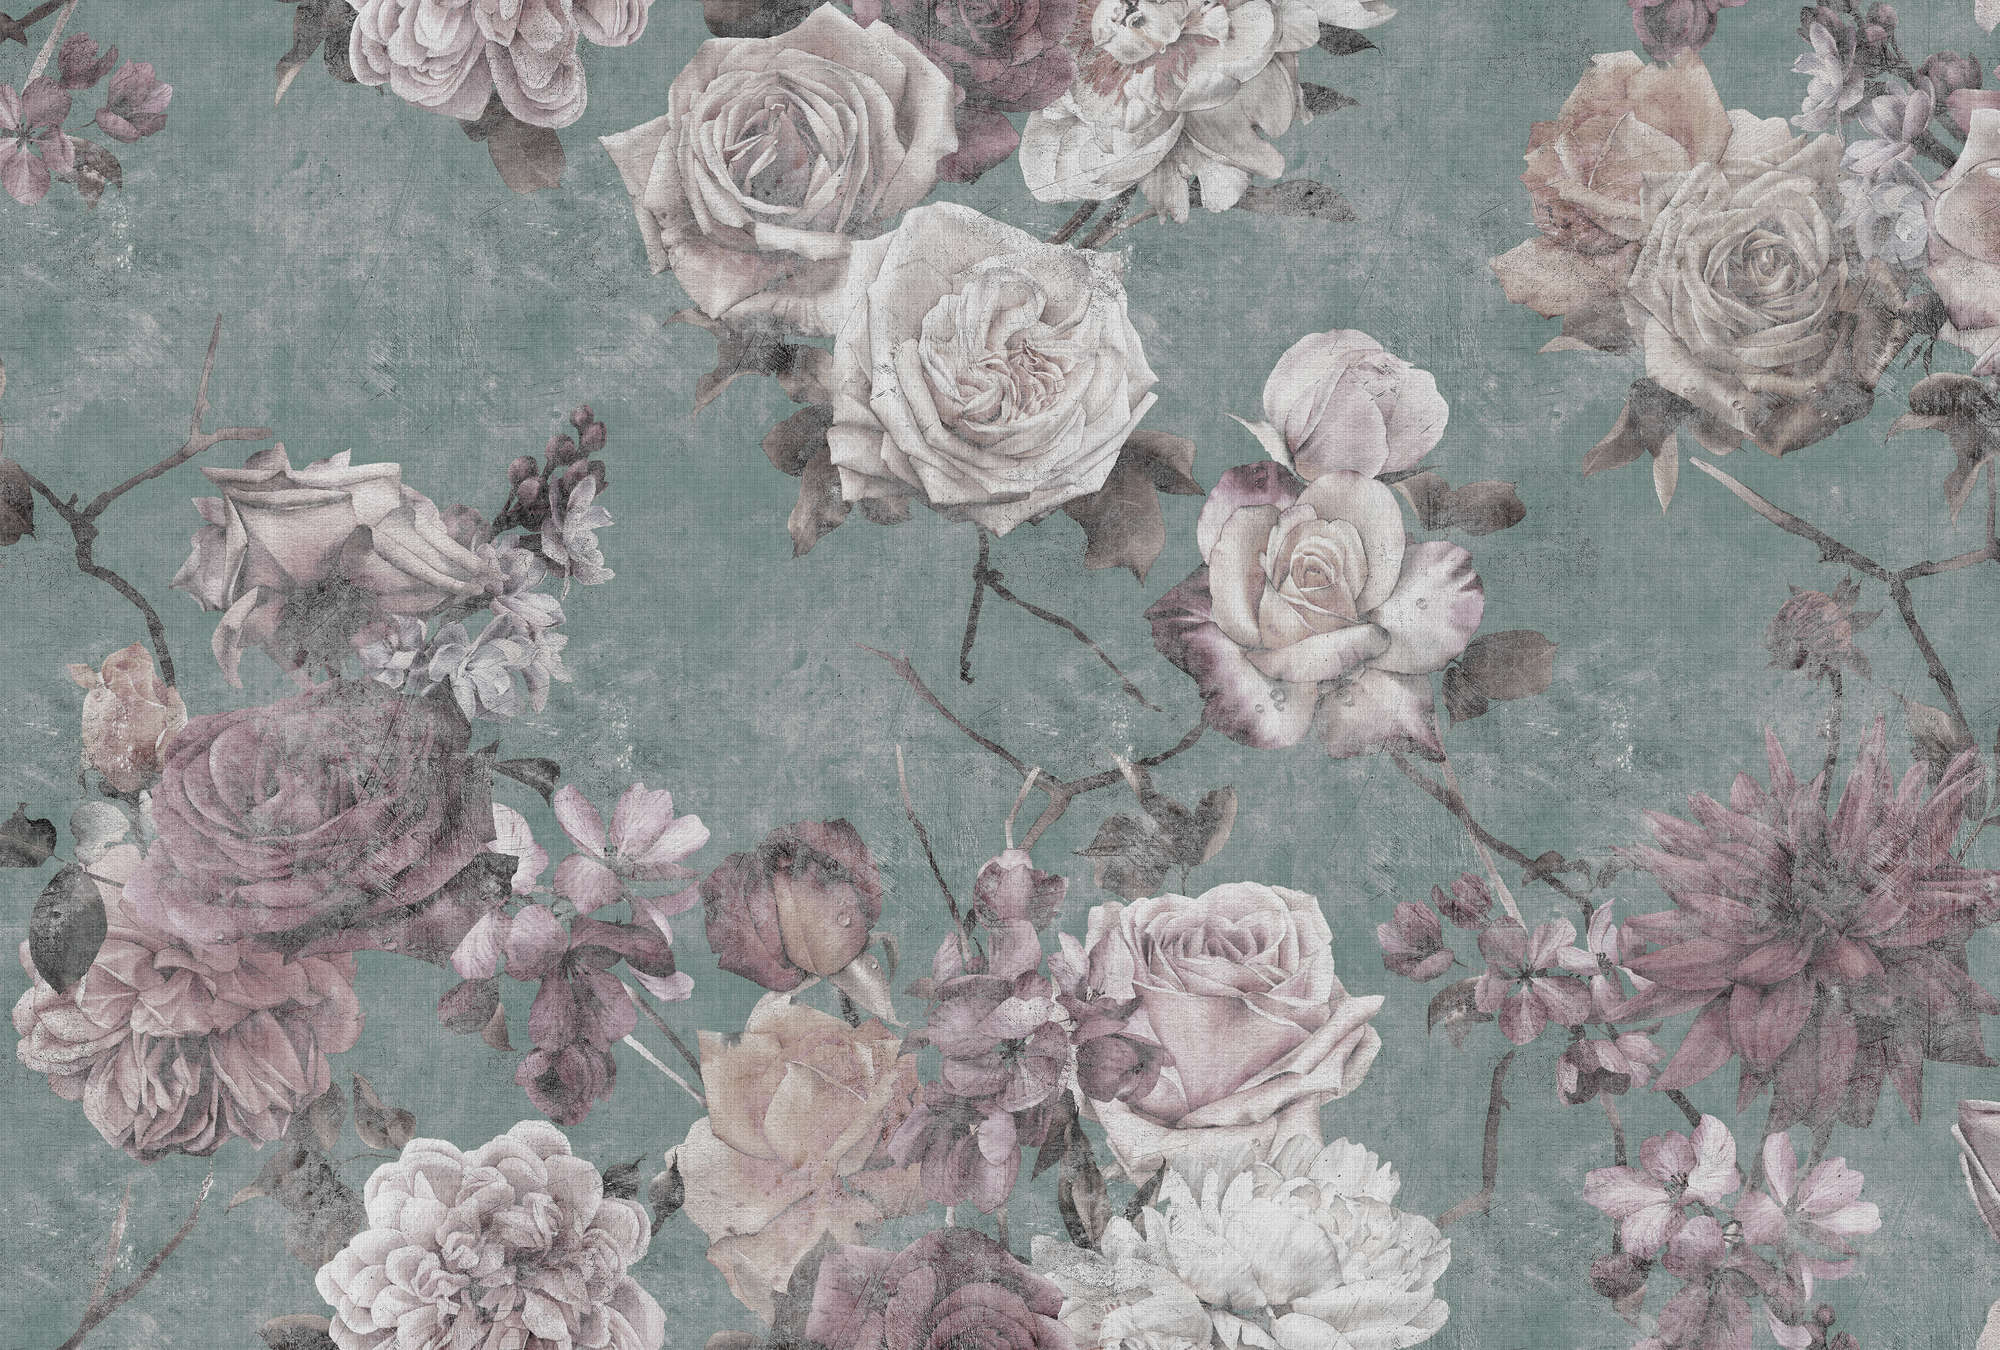             Sleeping Beauty 2 - Fototapete Rosenblüten im Vintage Stil- Naturleinen Struktur – Rosa, Türkis | Premium Glattvlies
        